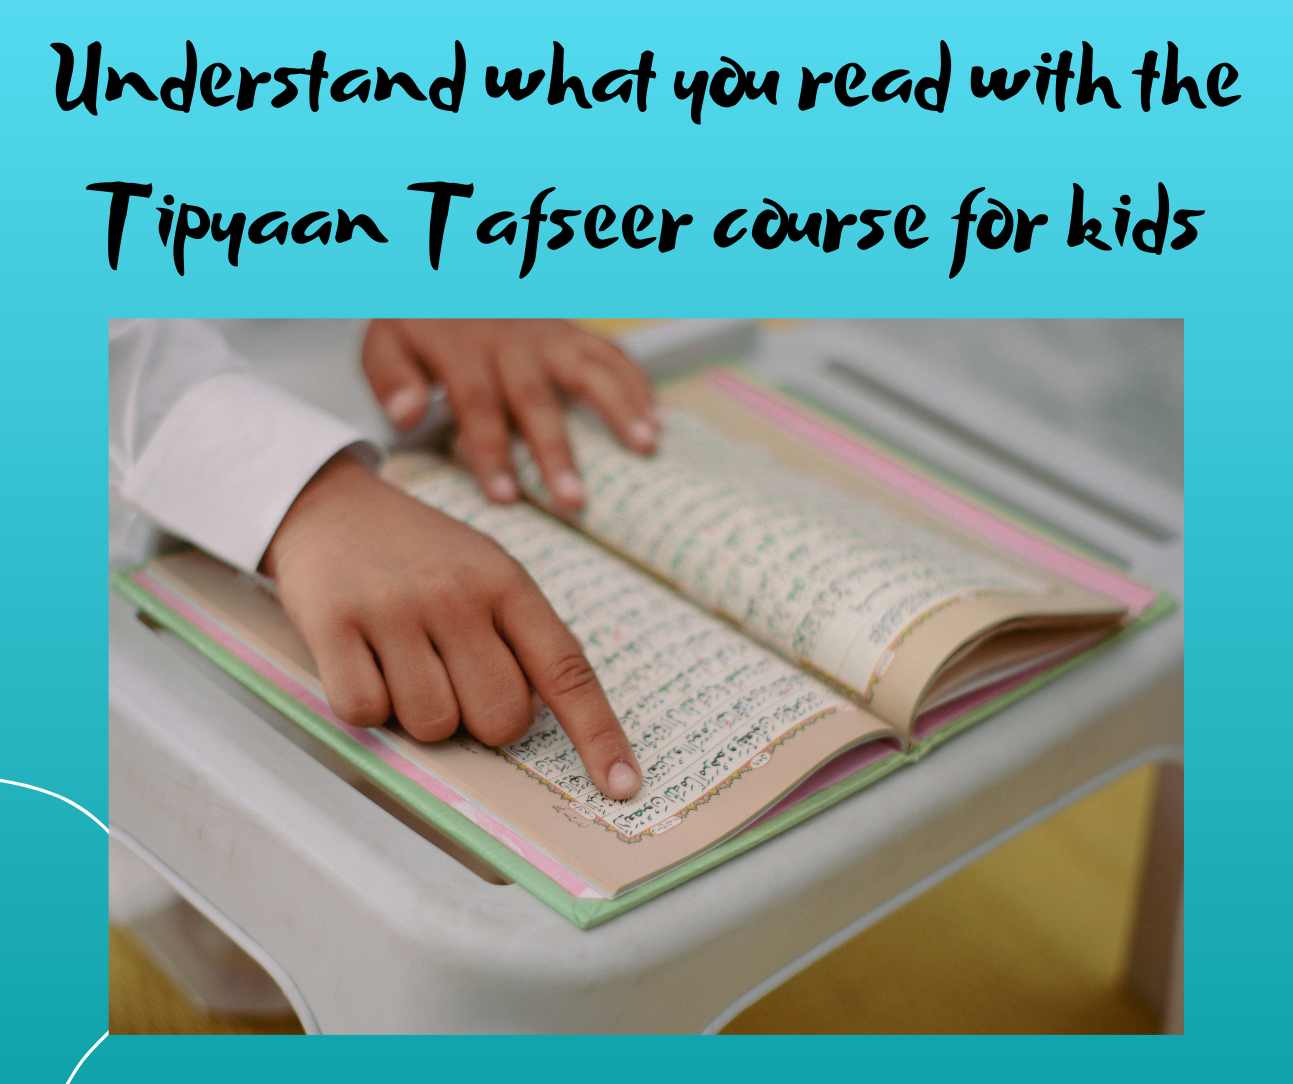 Quran Tafseer online course for kids